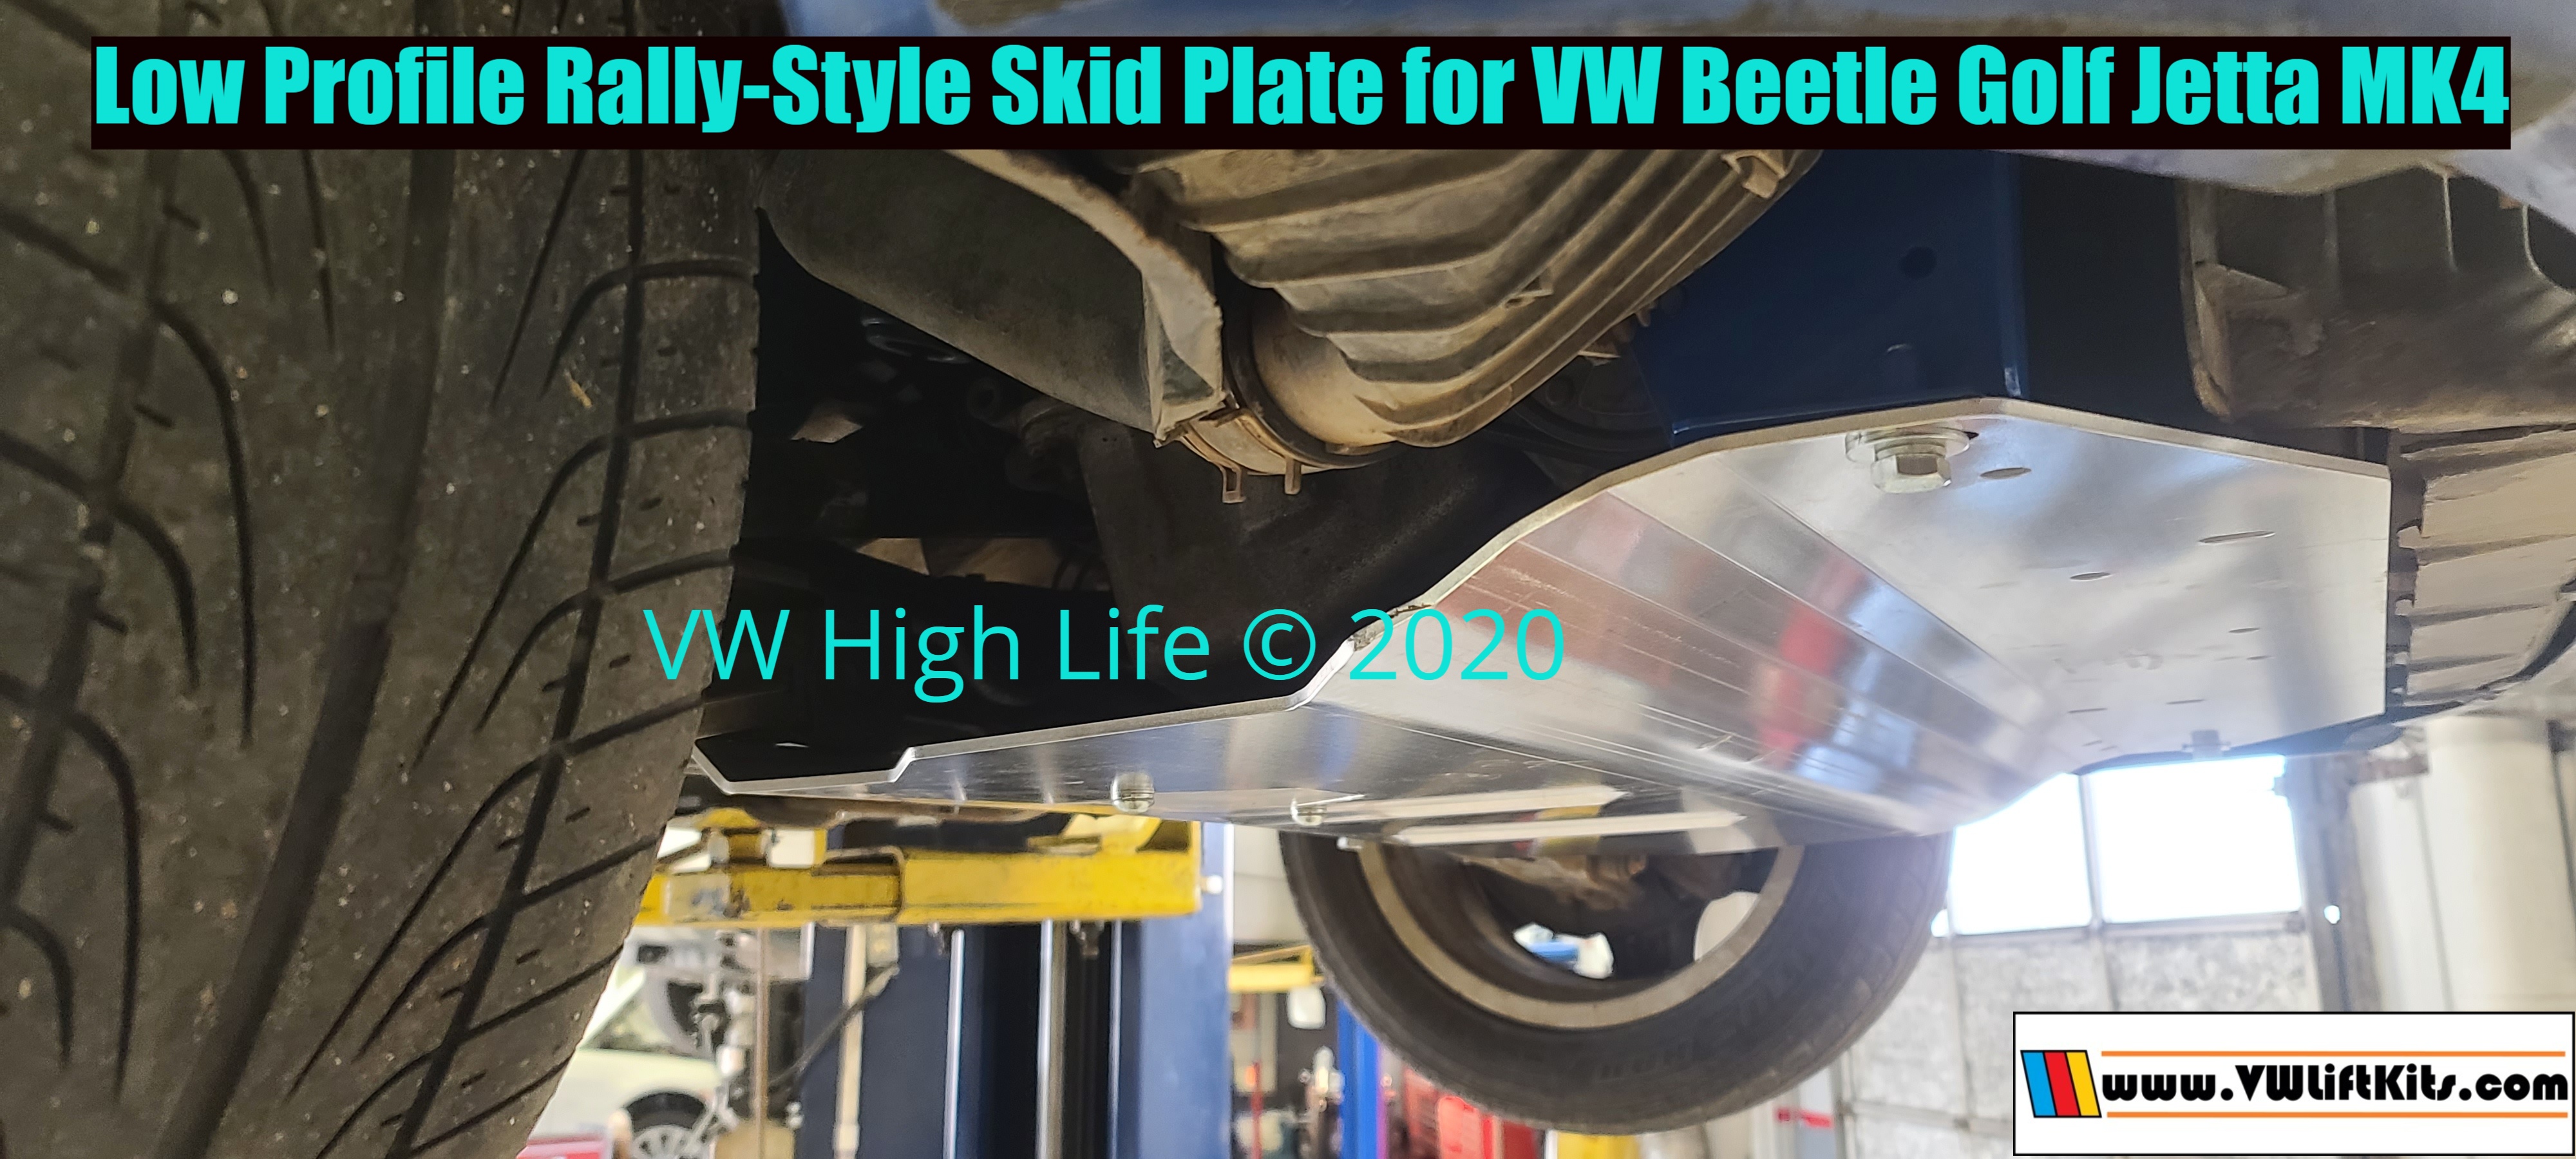 Low Profile Heavy Duty Rally-Style Skid Plate for VW Beetle Golf Jetta MK4. We ship worldwide!